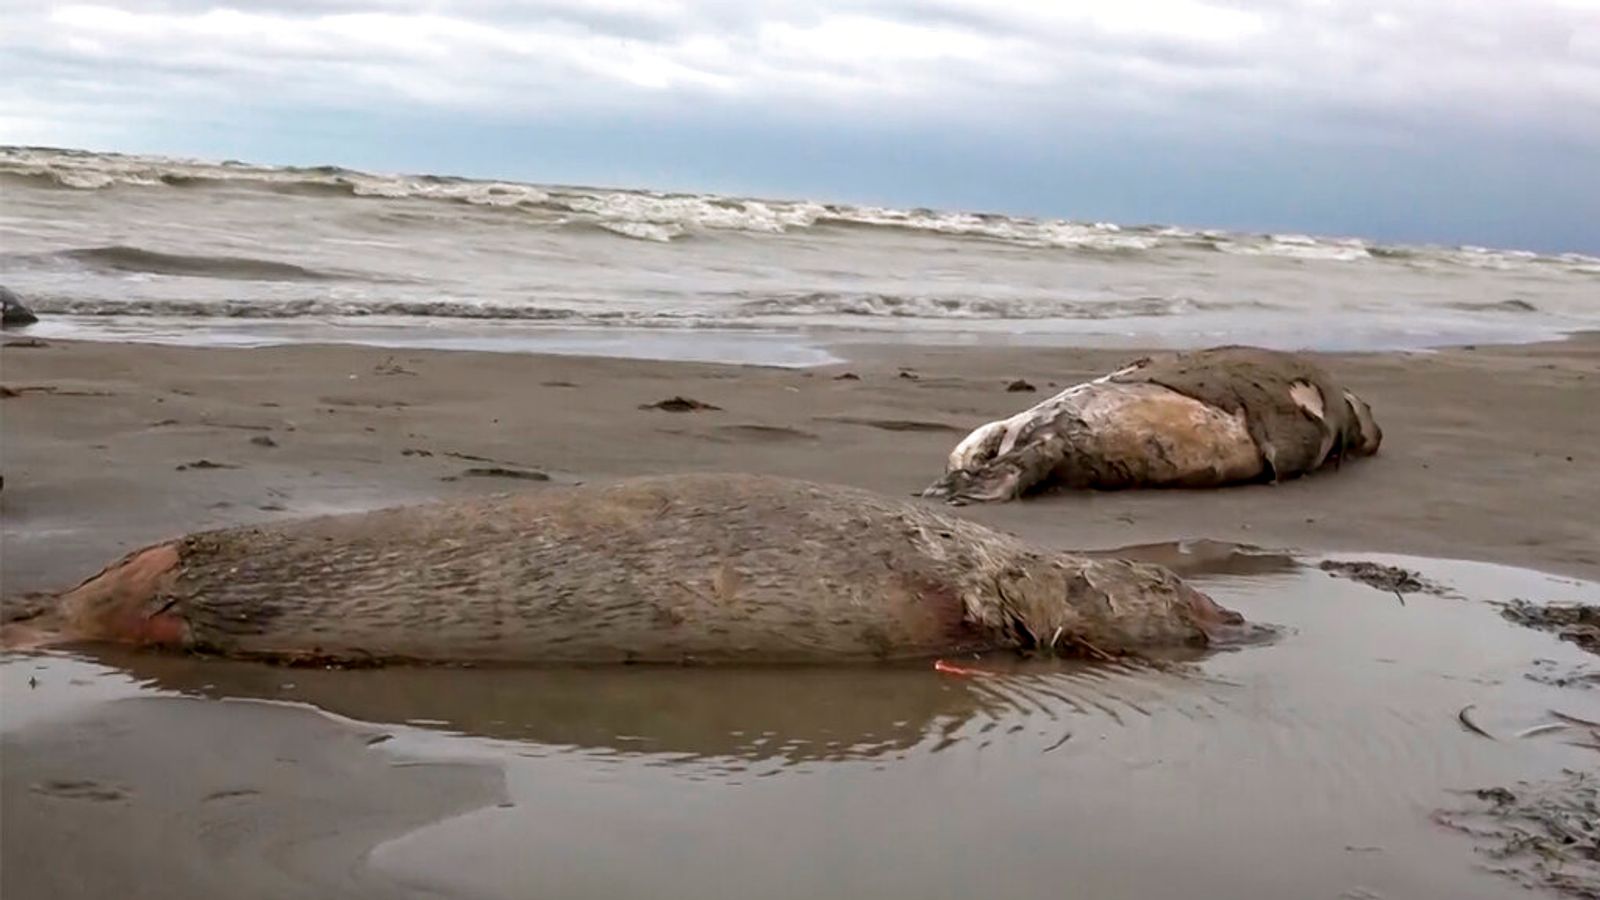 Bodies of 1,700 dead seals found along Russia’s Caspian coast | World News